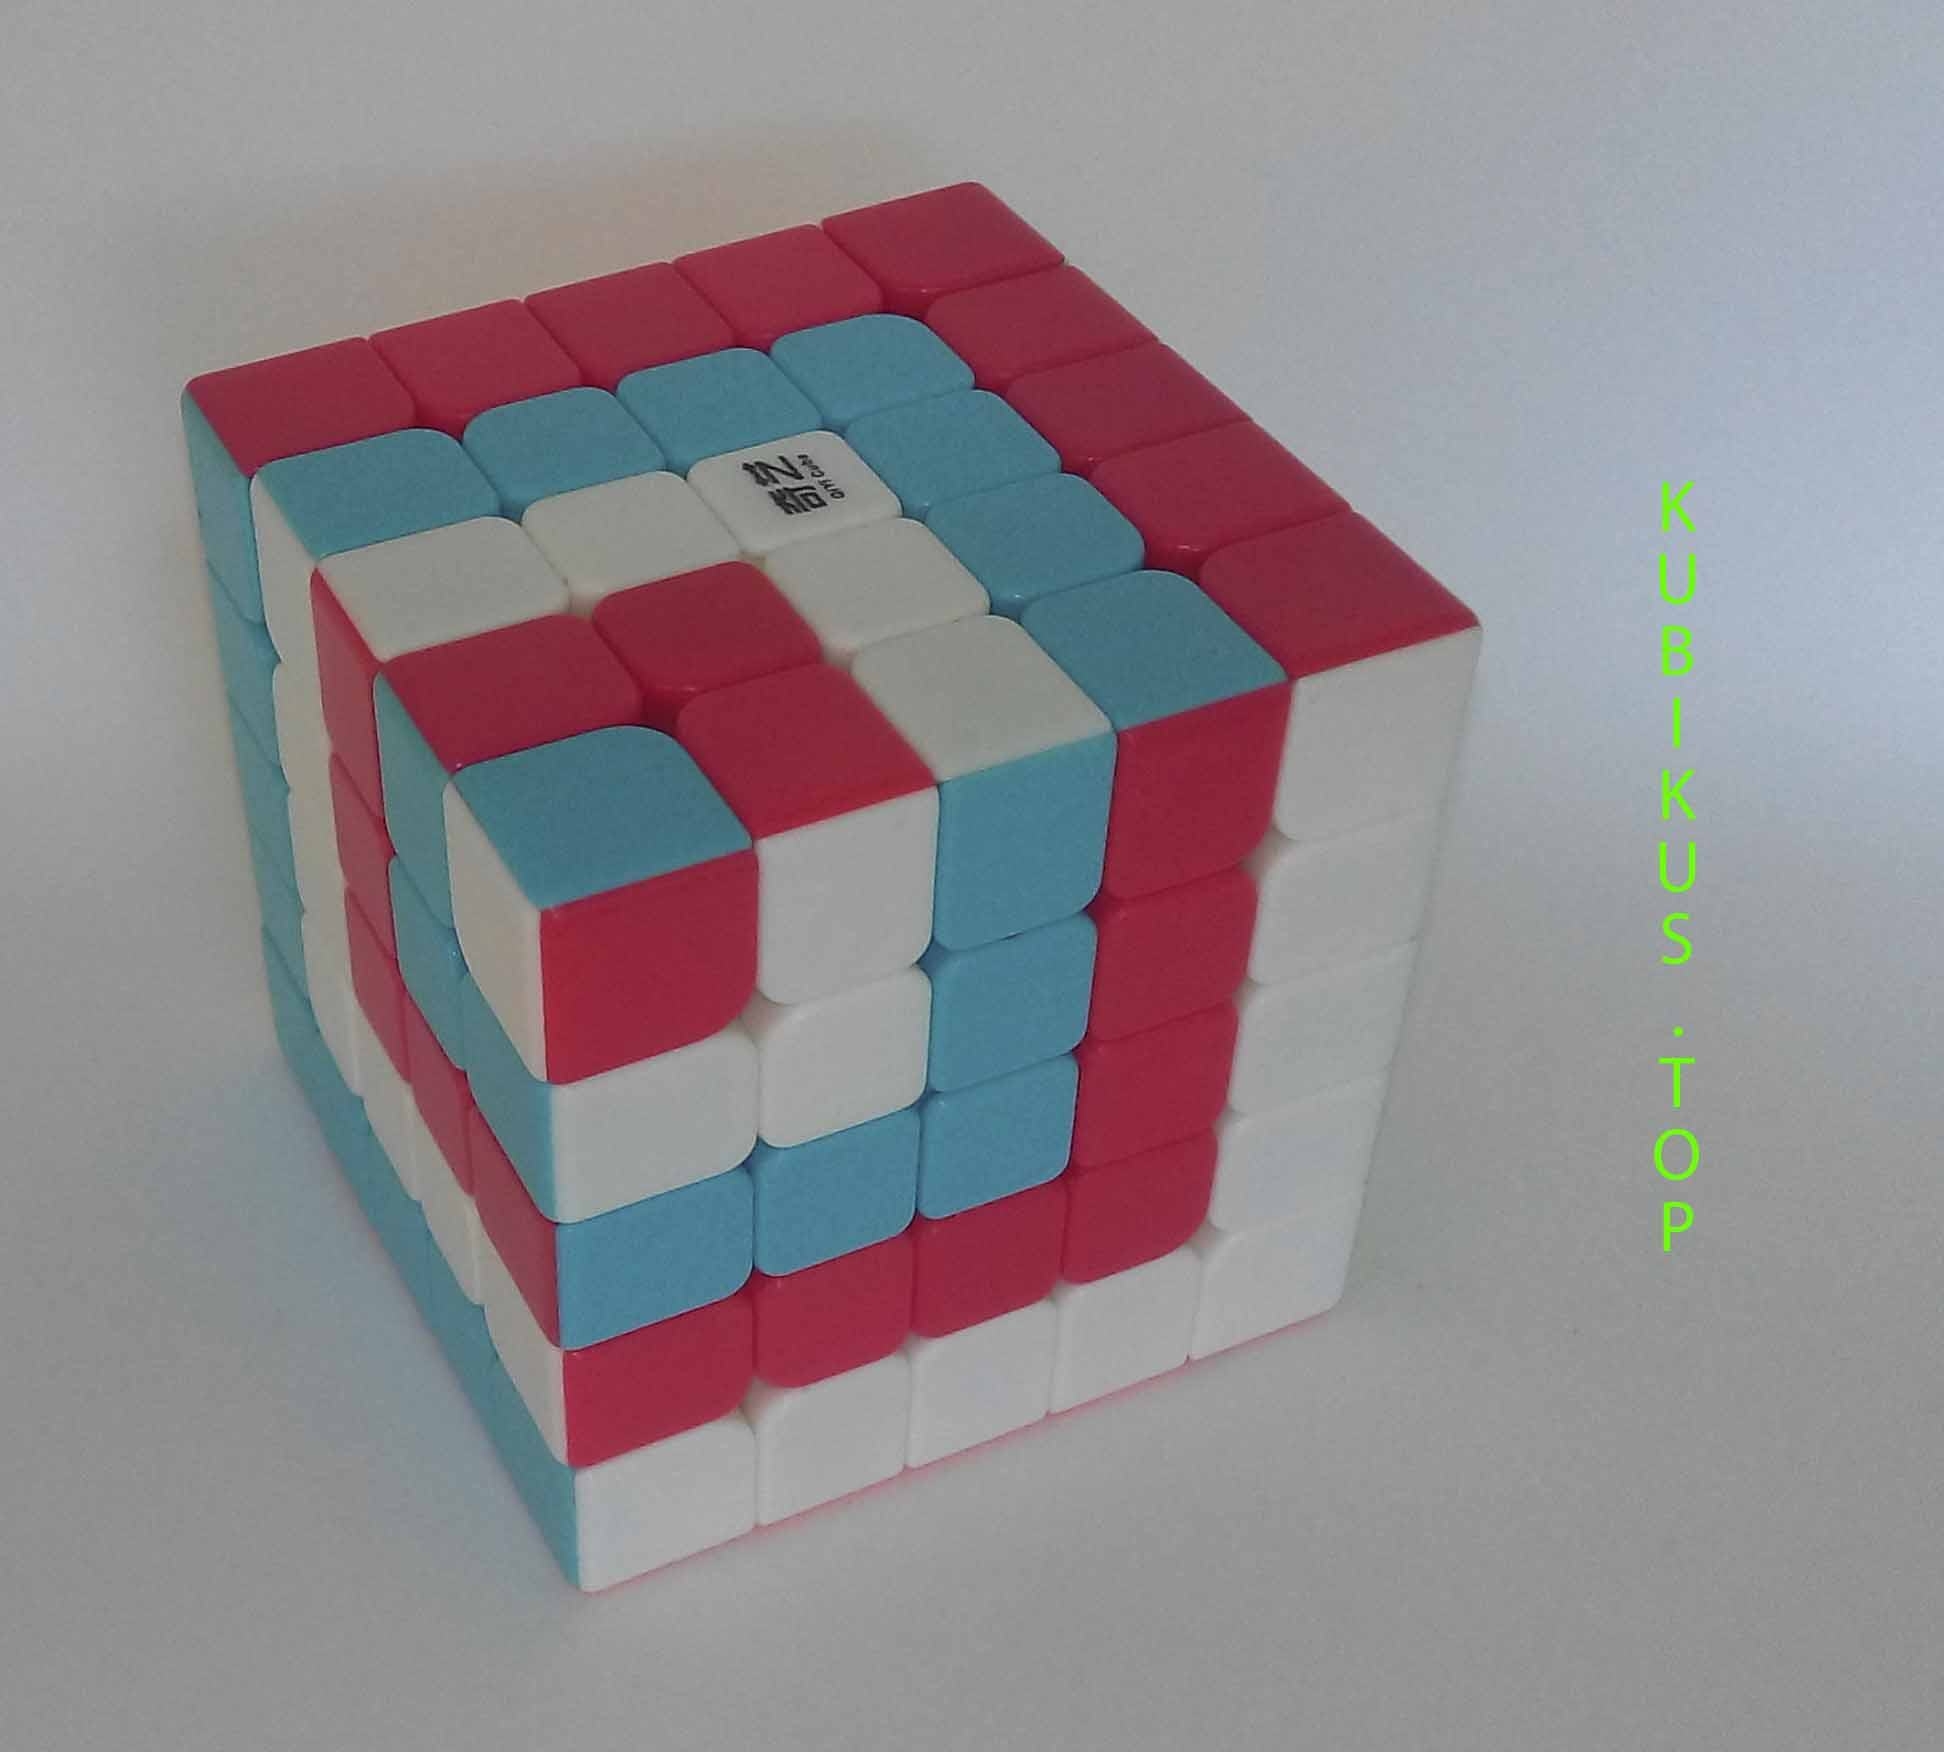 Пятерка кубов. Кубик Рубика 3х3 куб в Кубе. Узоры на кубике Рубика 3х3 куб в Кубе. Кубик в Кубе в Кубе 3х3. Узоры на кубике Рубика 5х5 кубик в Кубе.